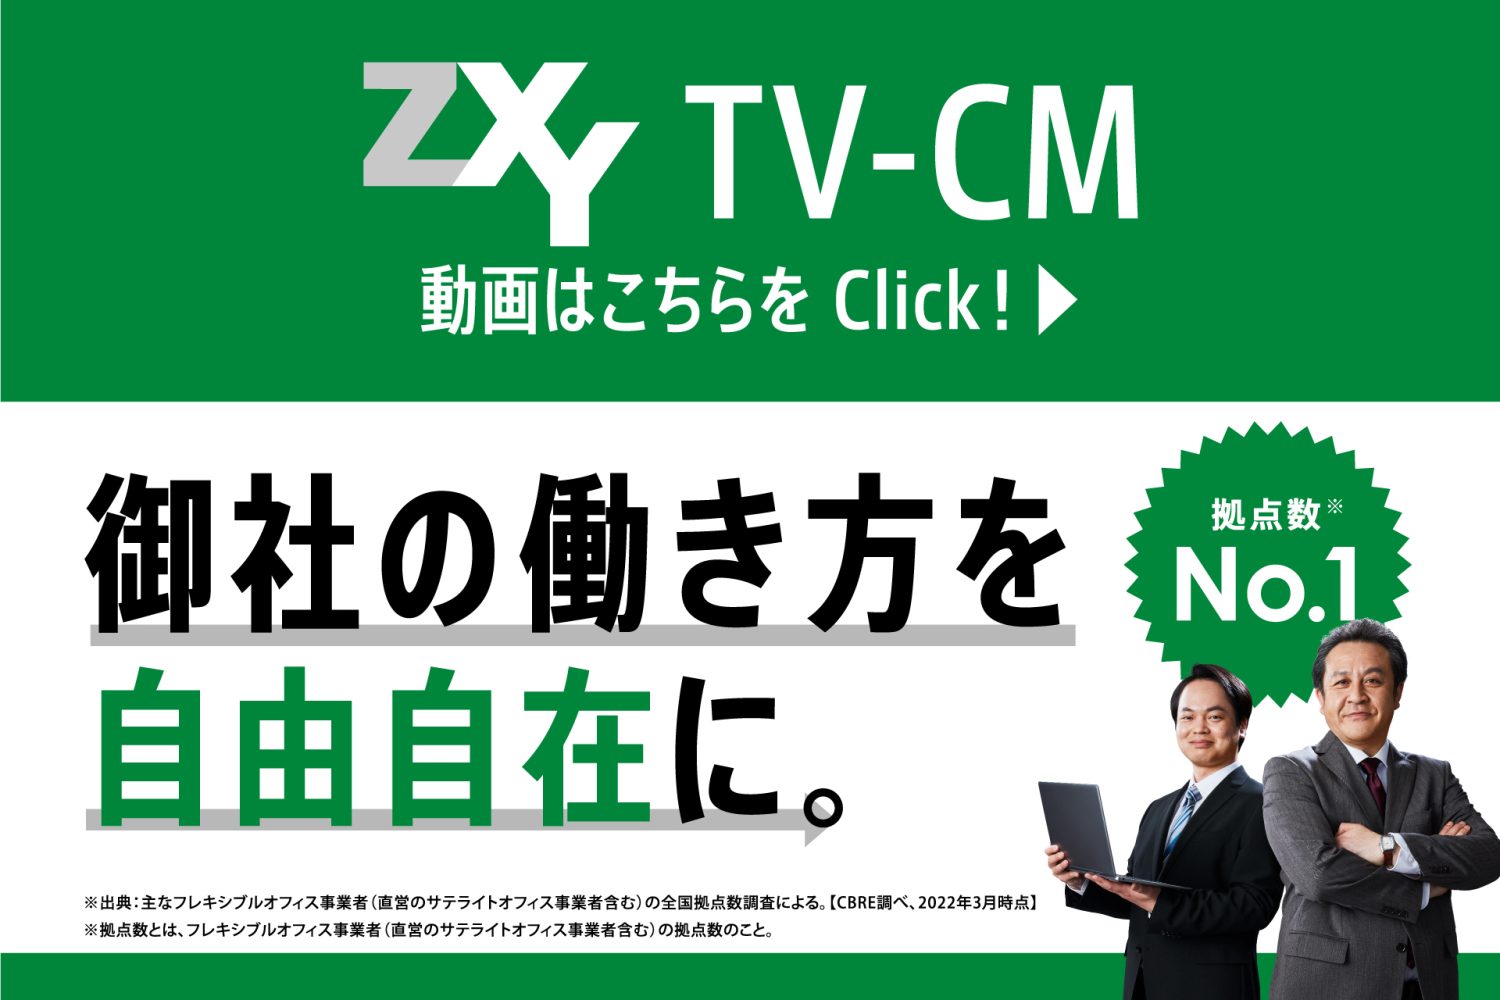 TV-CM ZXY